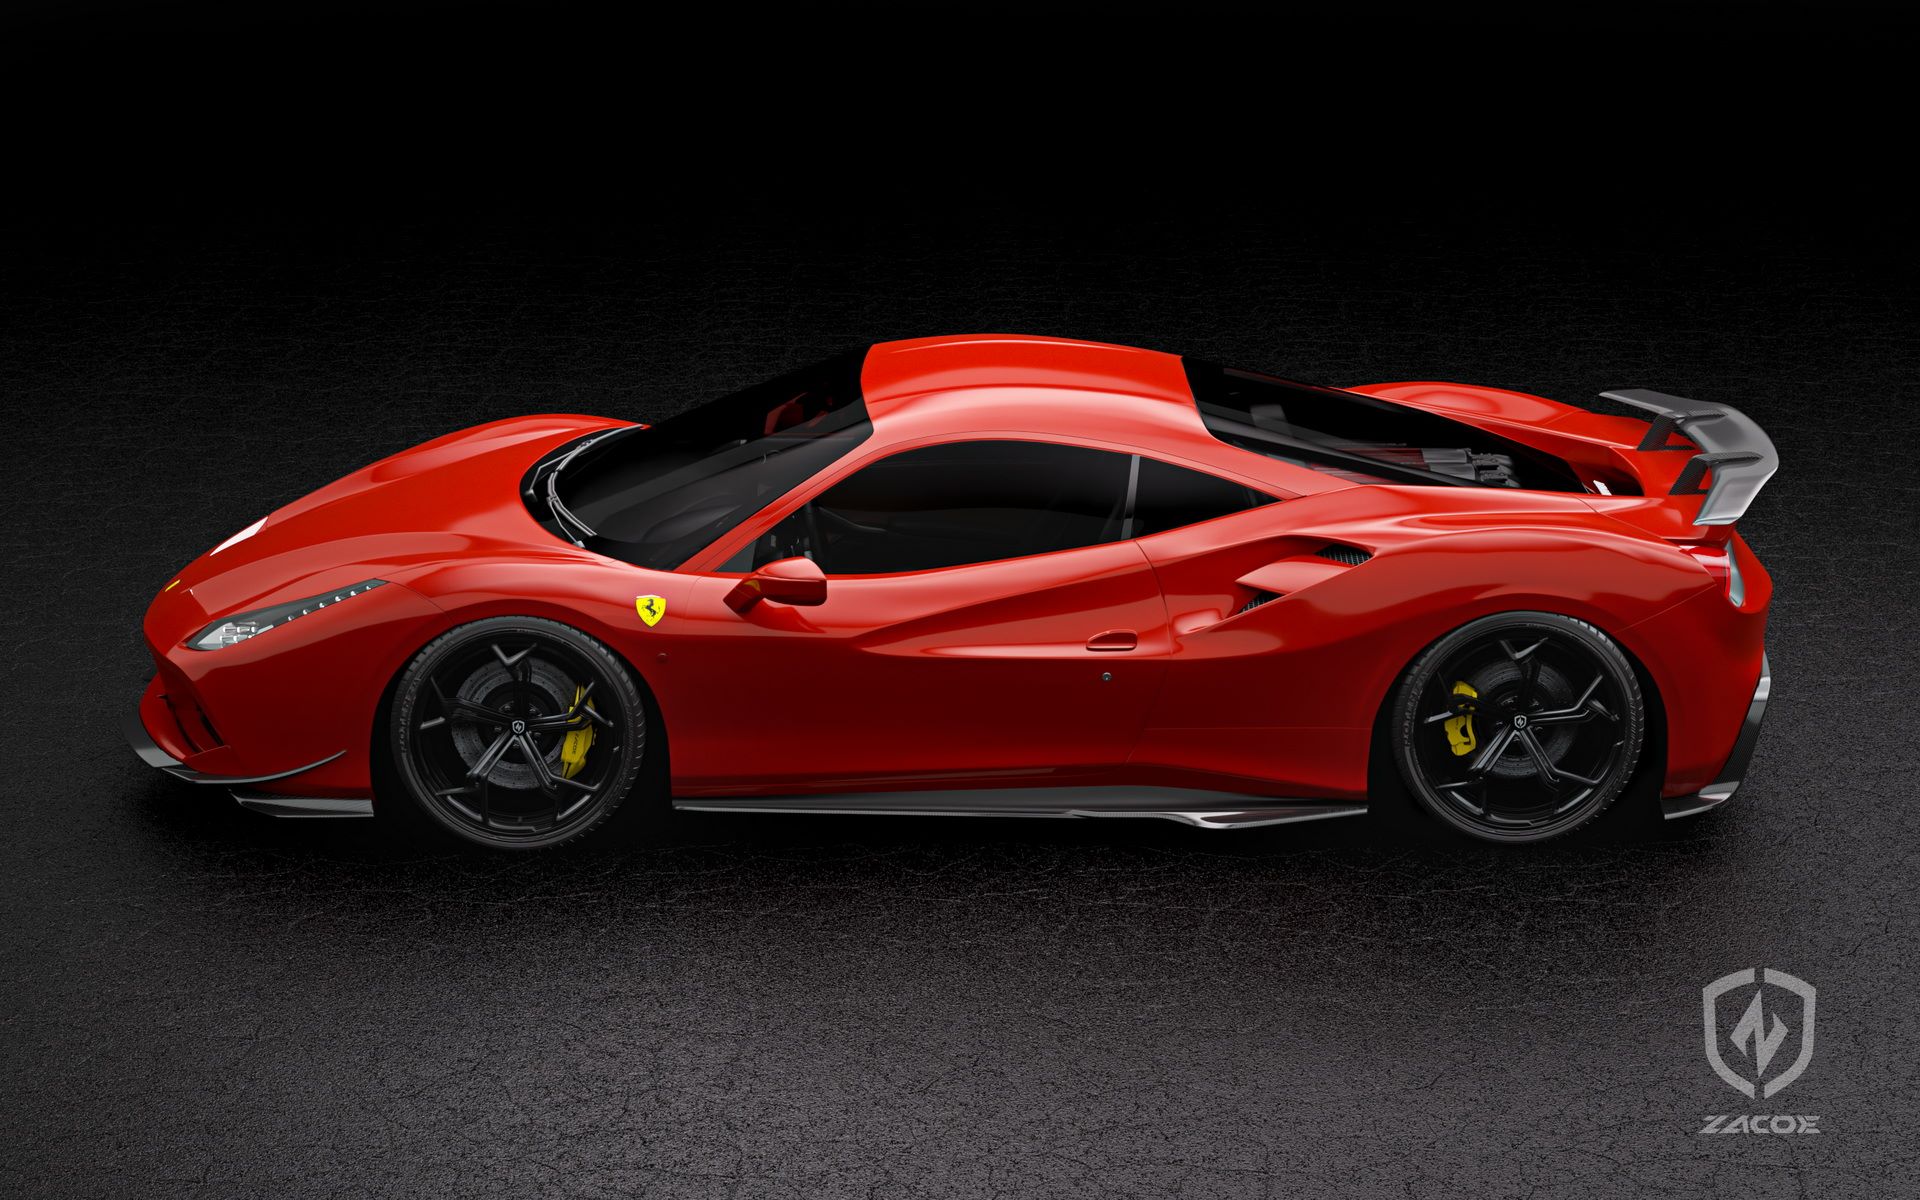 Ferrari-488-GTB-by-Zacoe-5